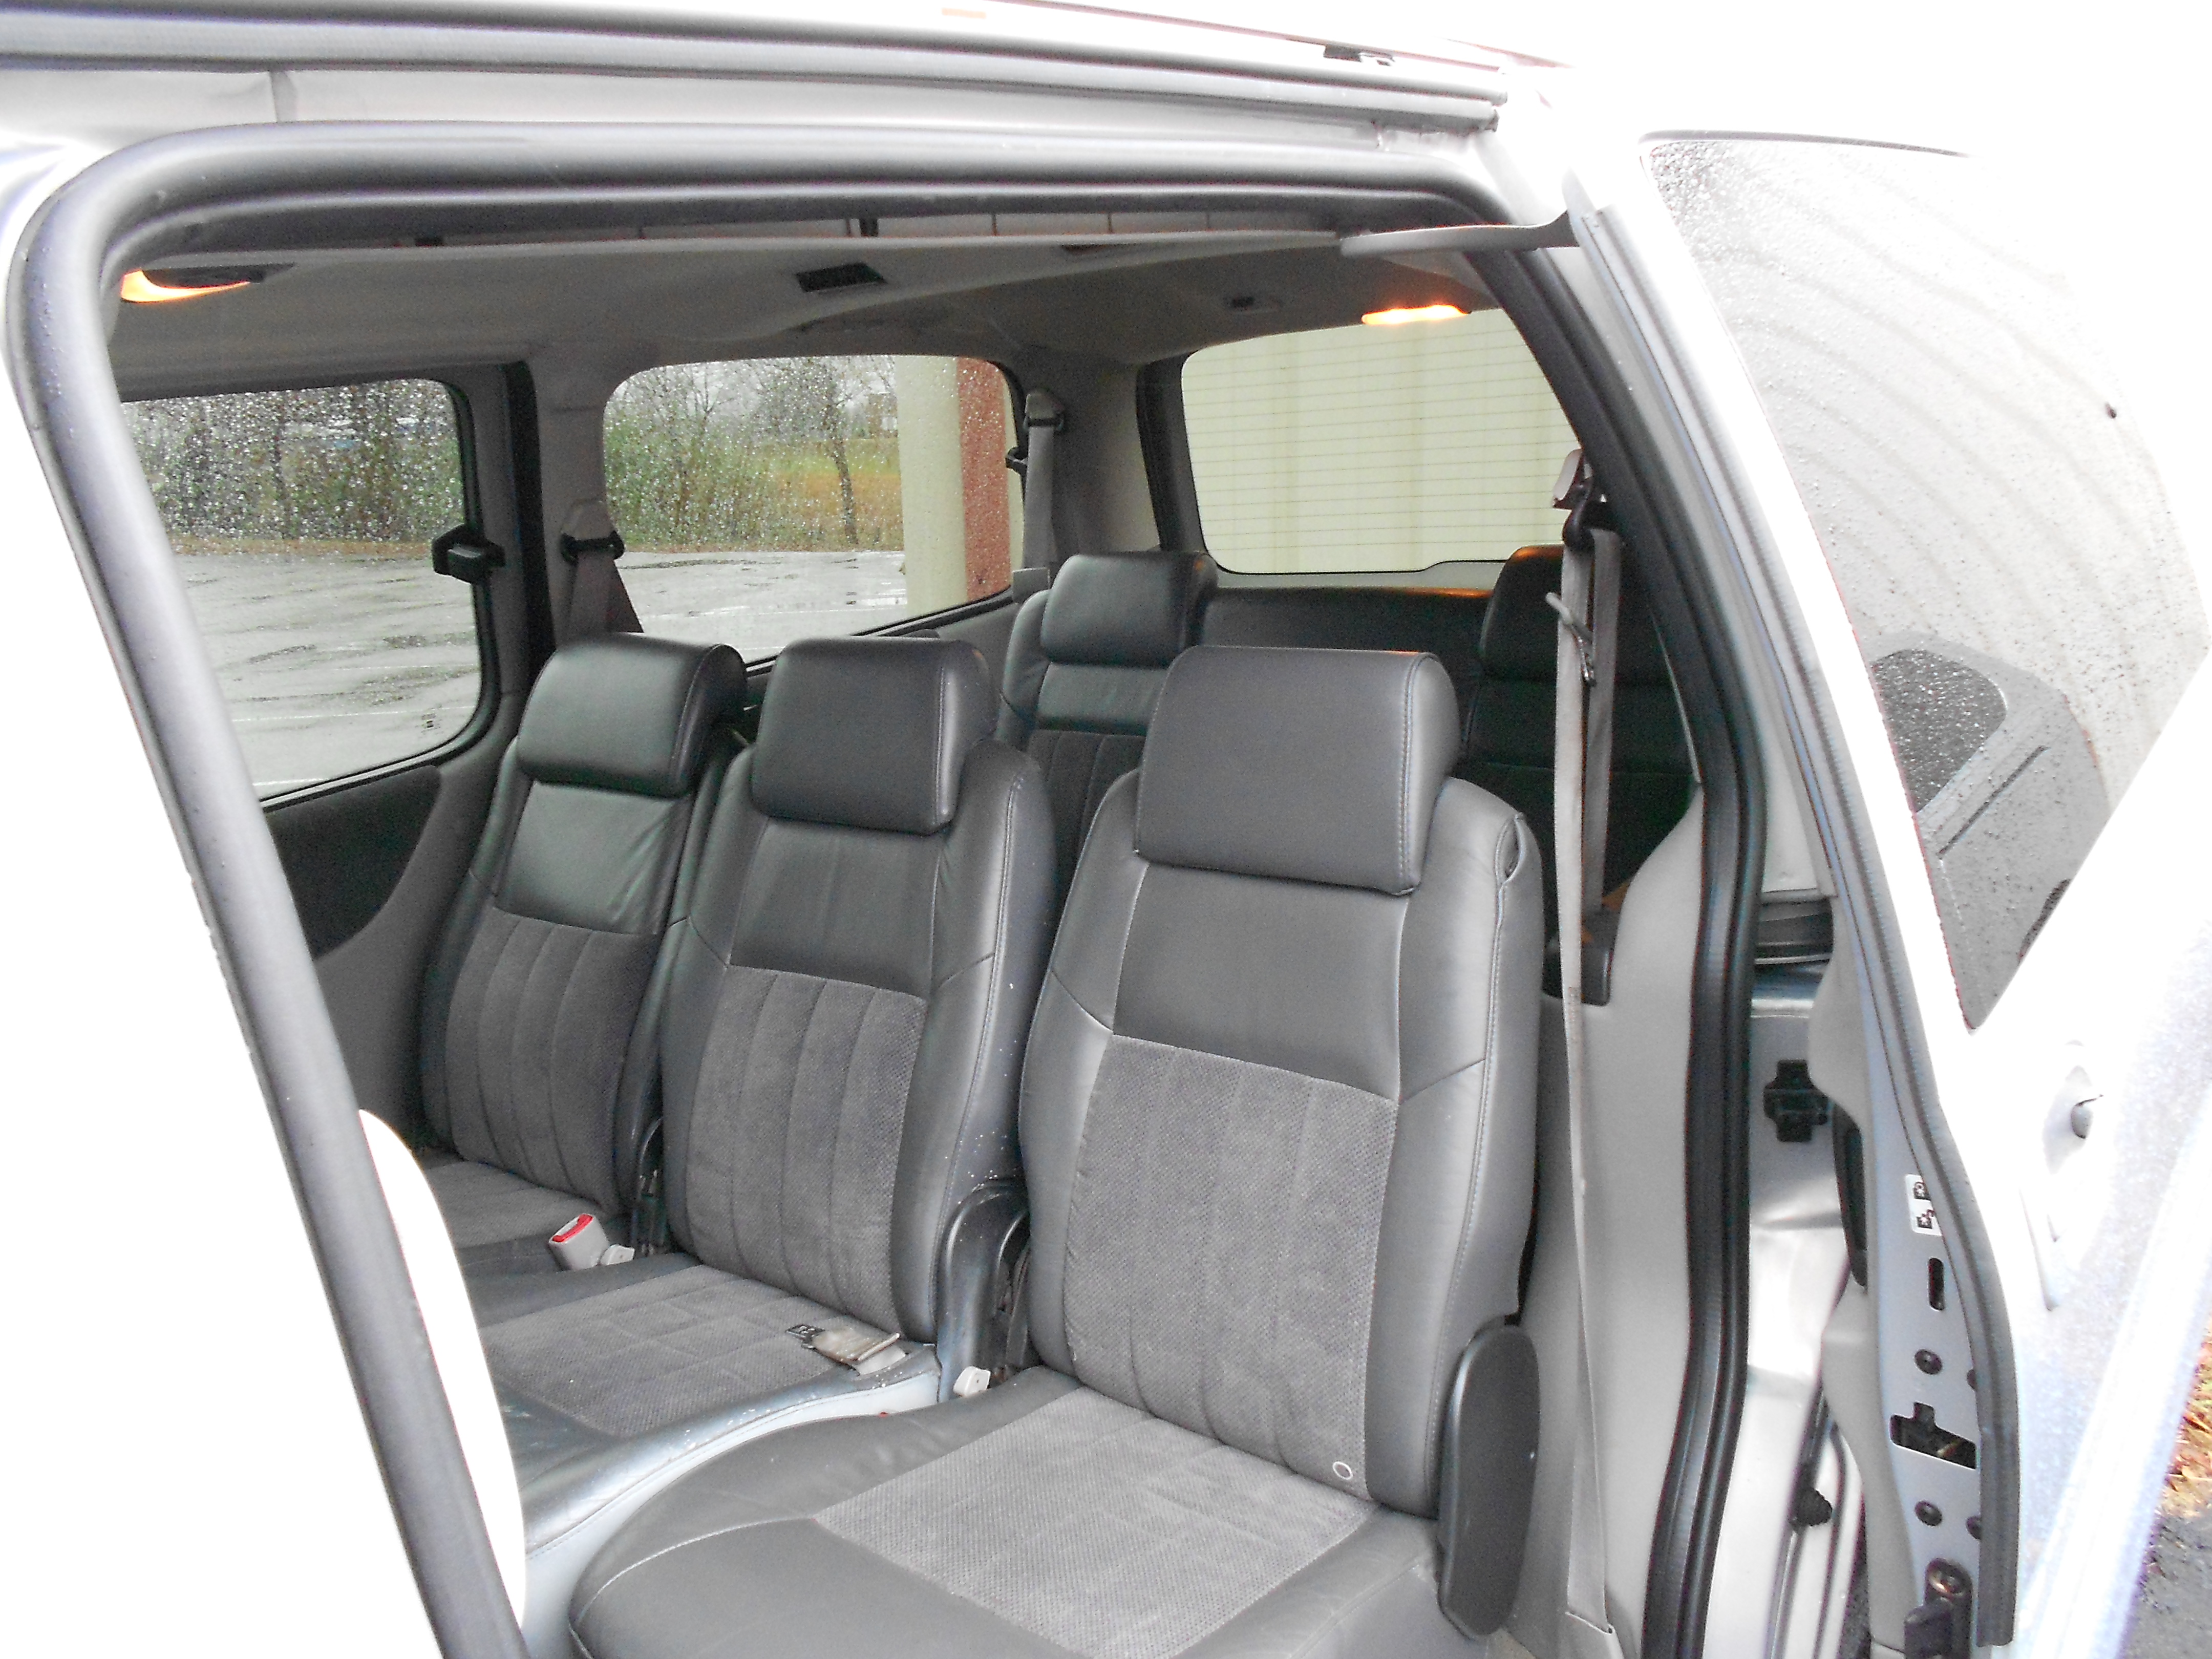 2001 Chevy Venture Mini Van New Used Car Reviews 2018